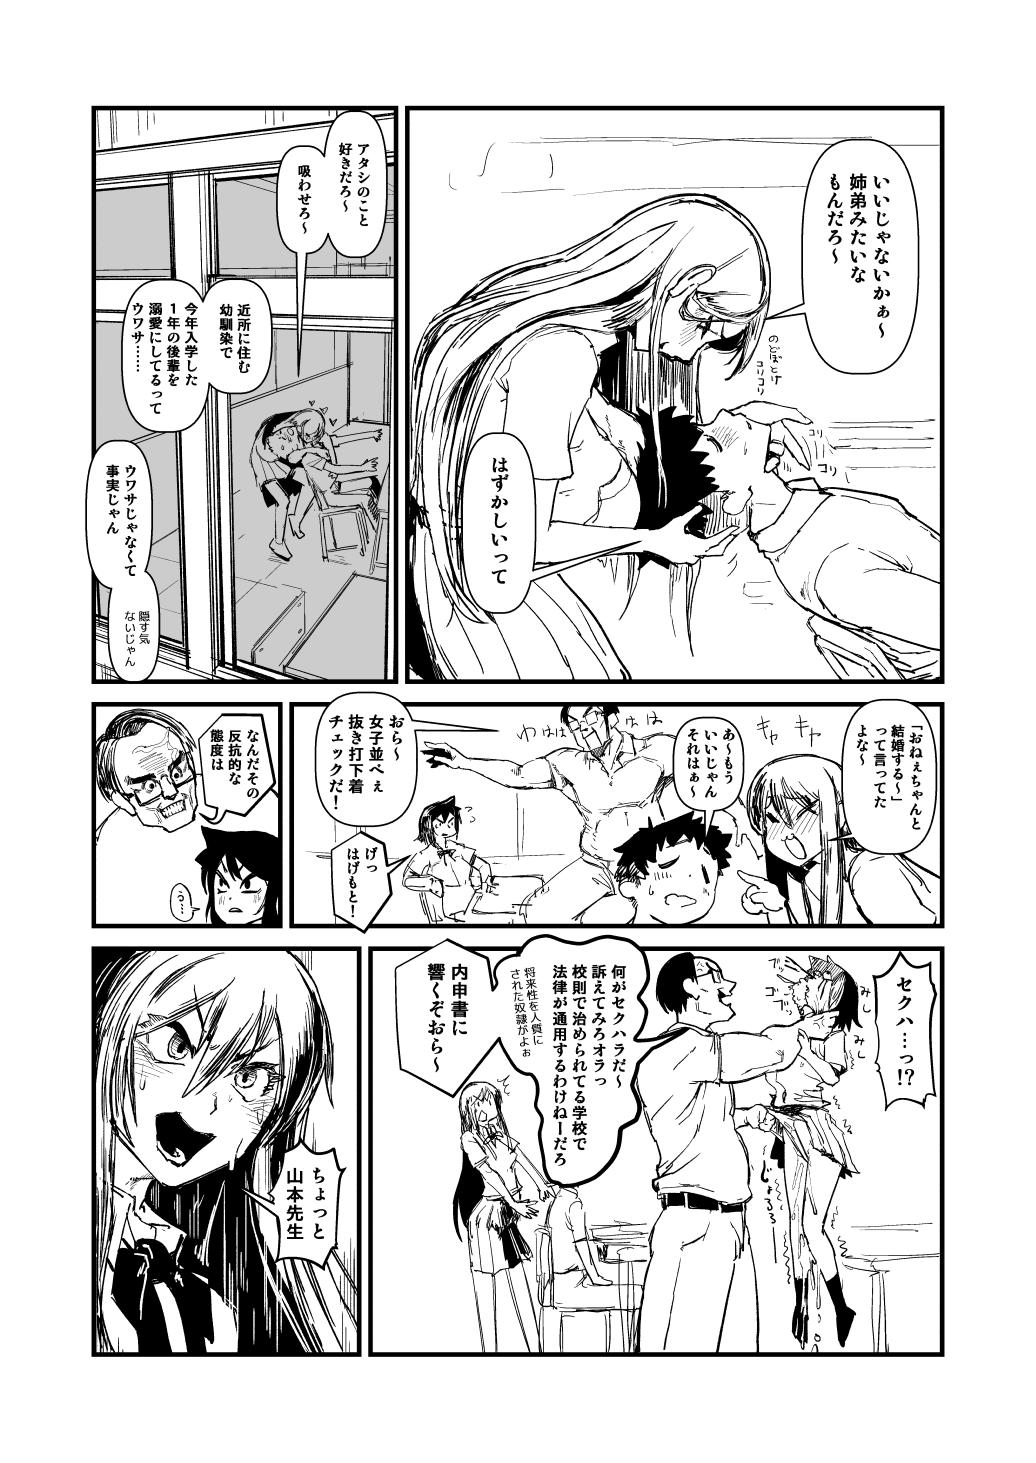 One 黒髪ロング委員長の幼馴染NTR漫画 - Original Gordita - Page 2